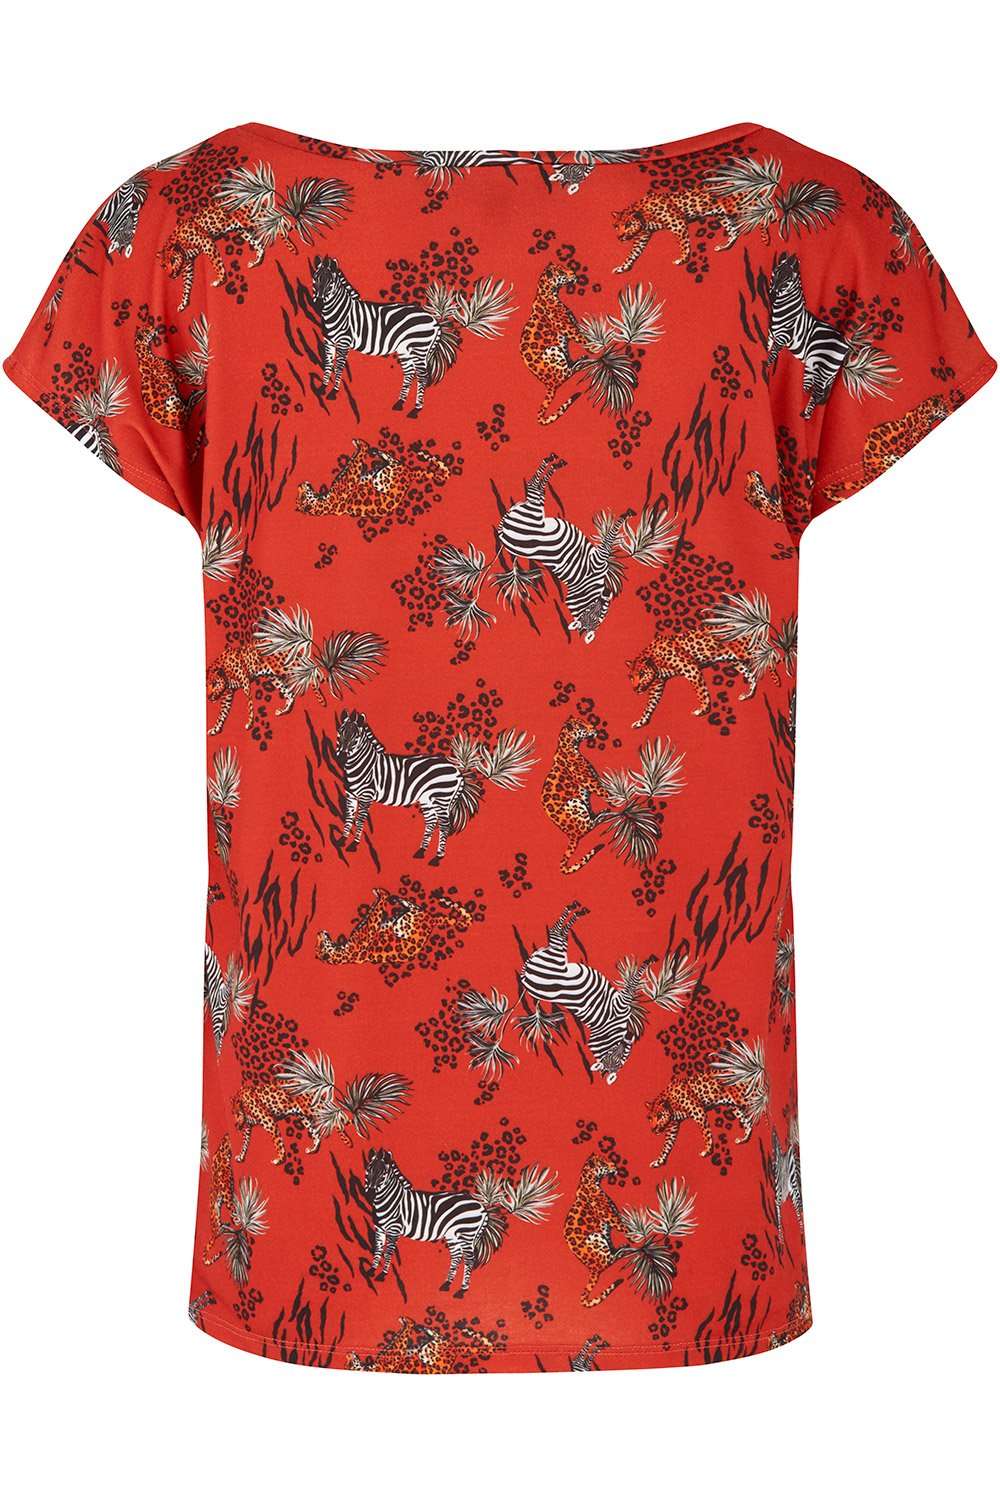 safari animal print shirt